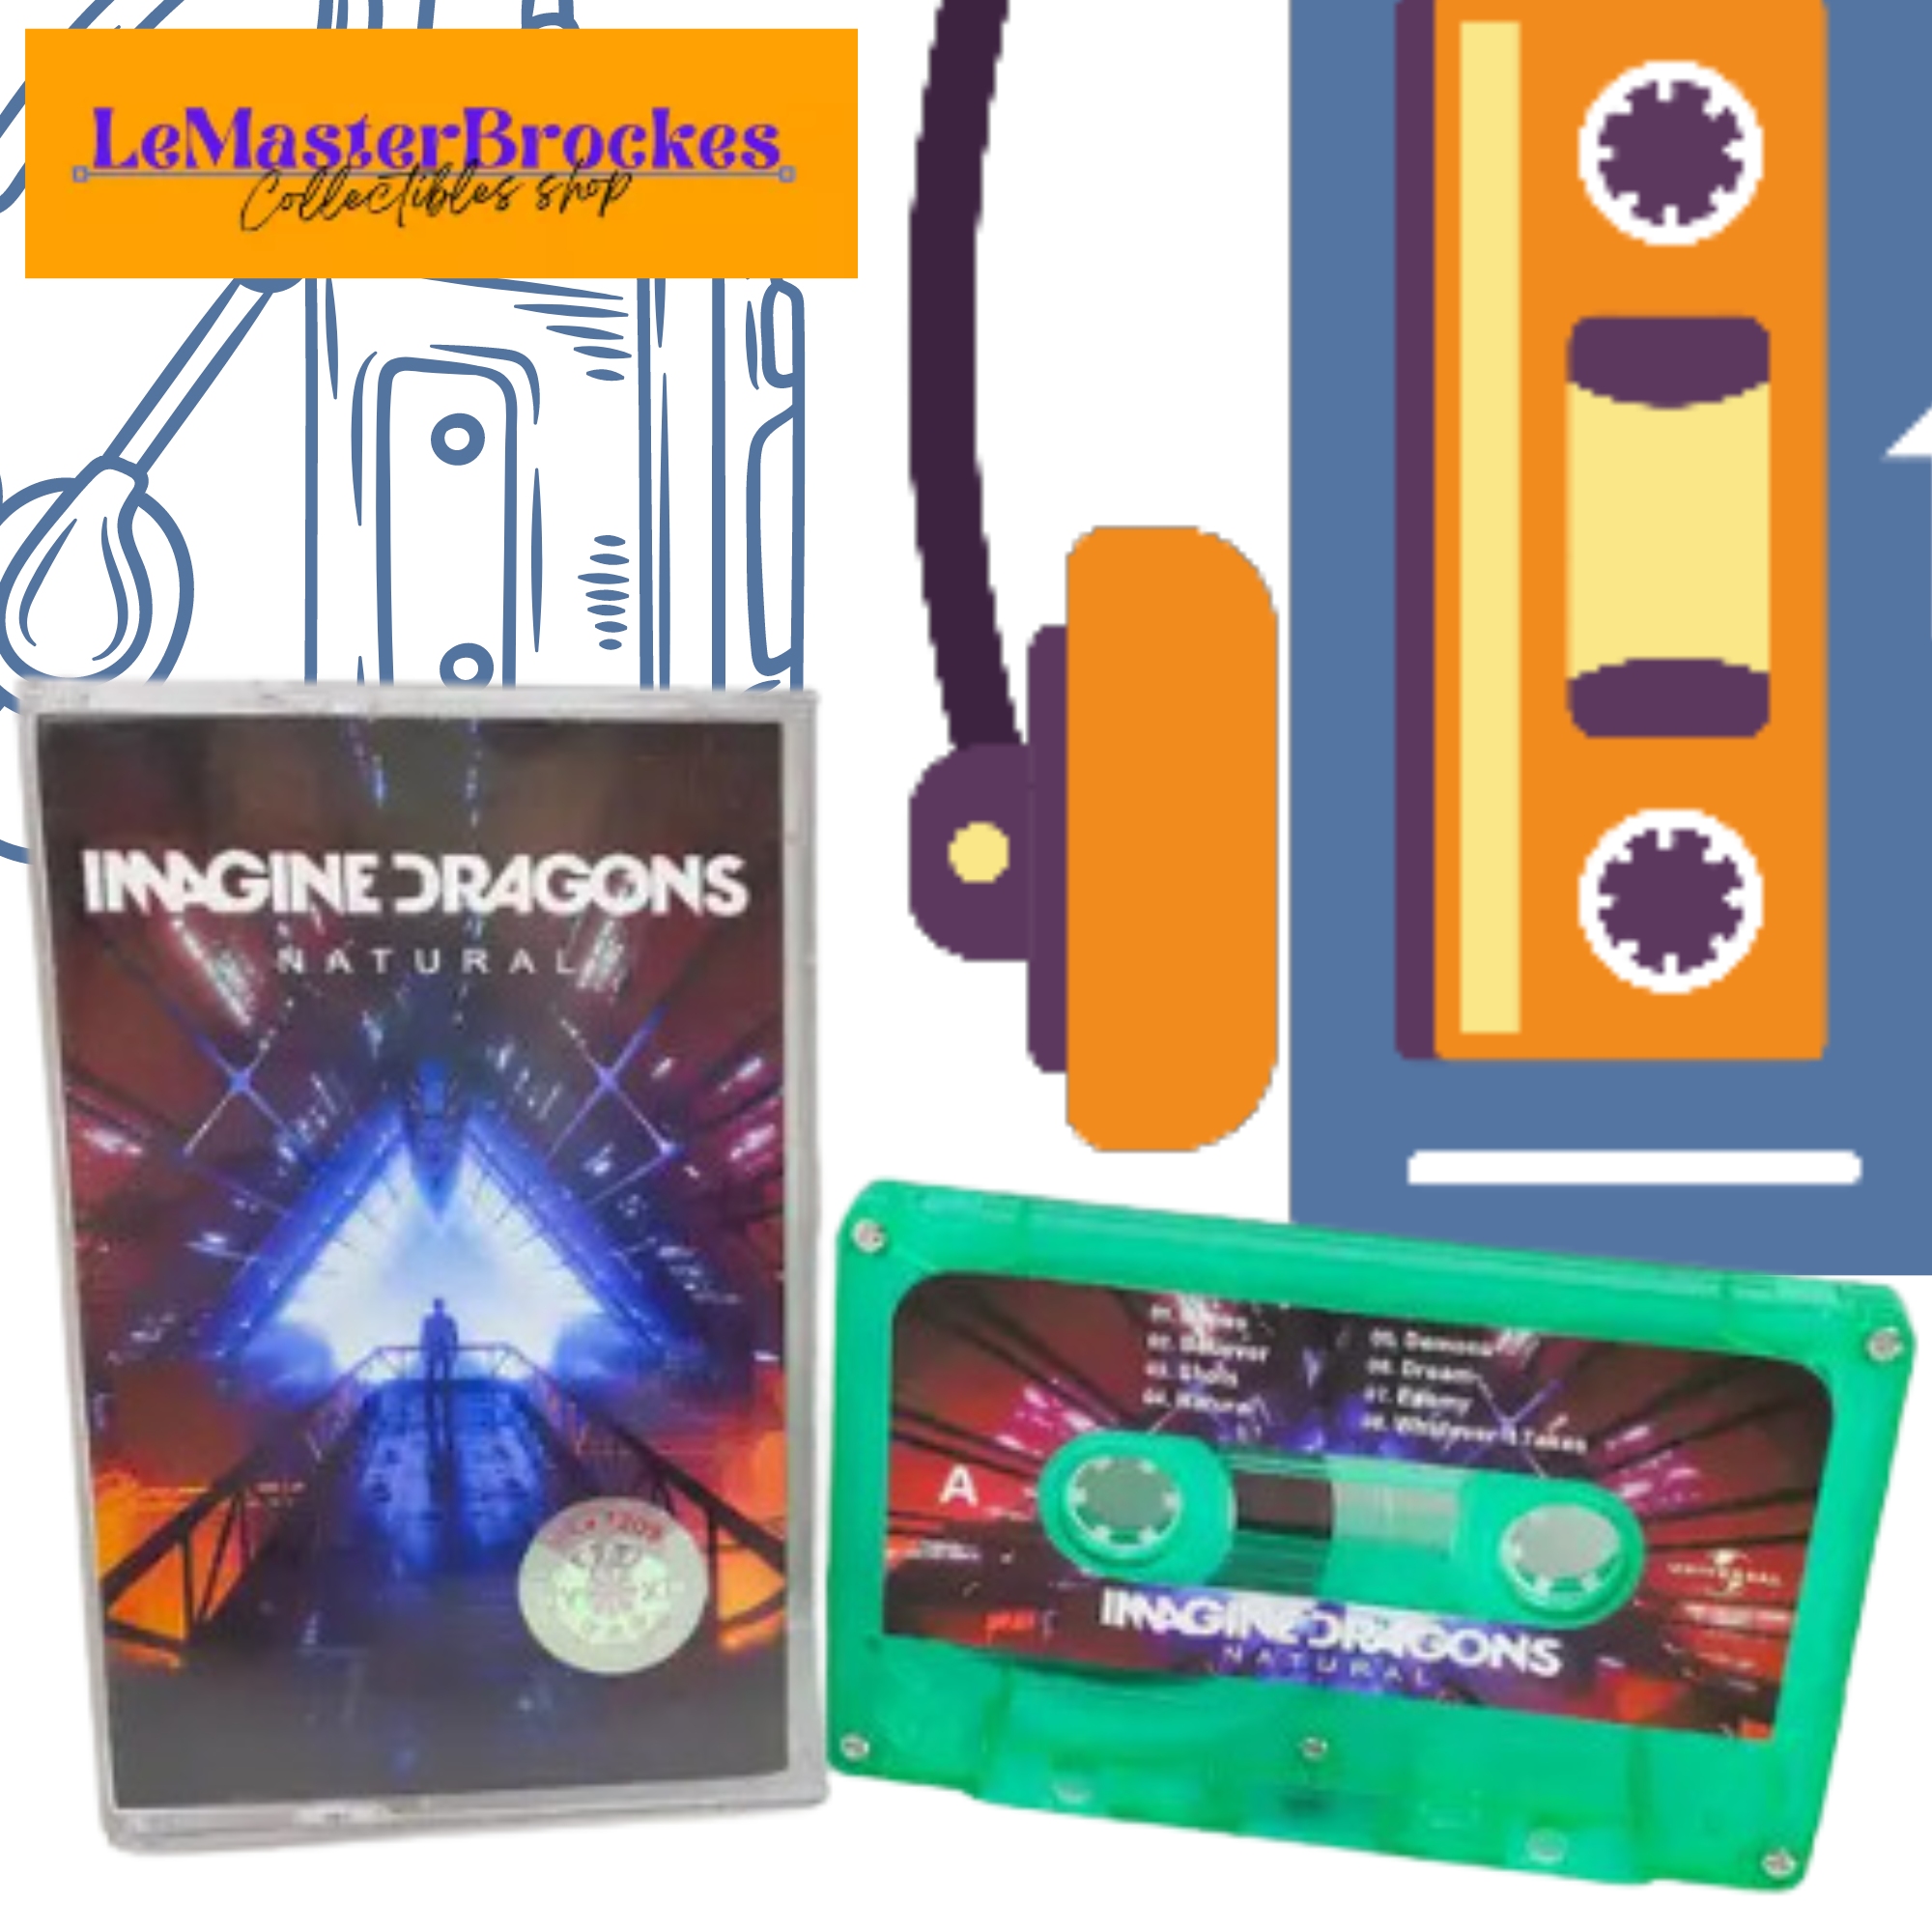 cassette IMAGINE DRAGONS NATURAL